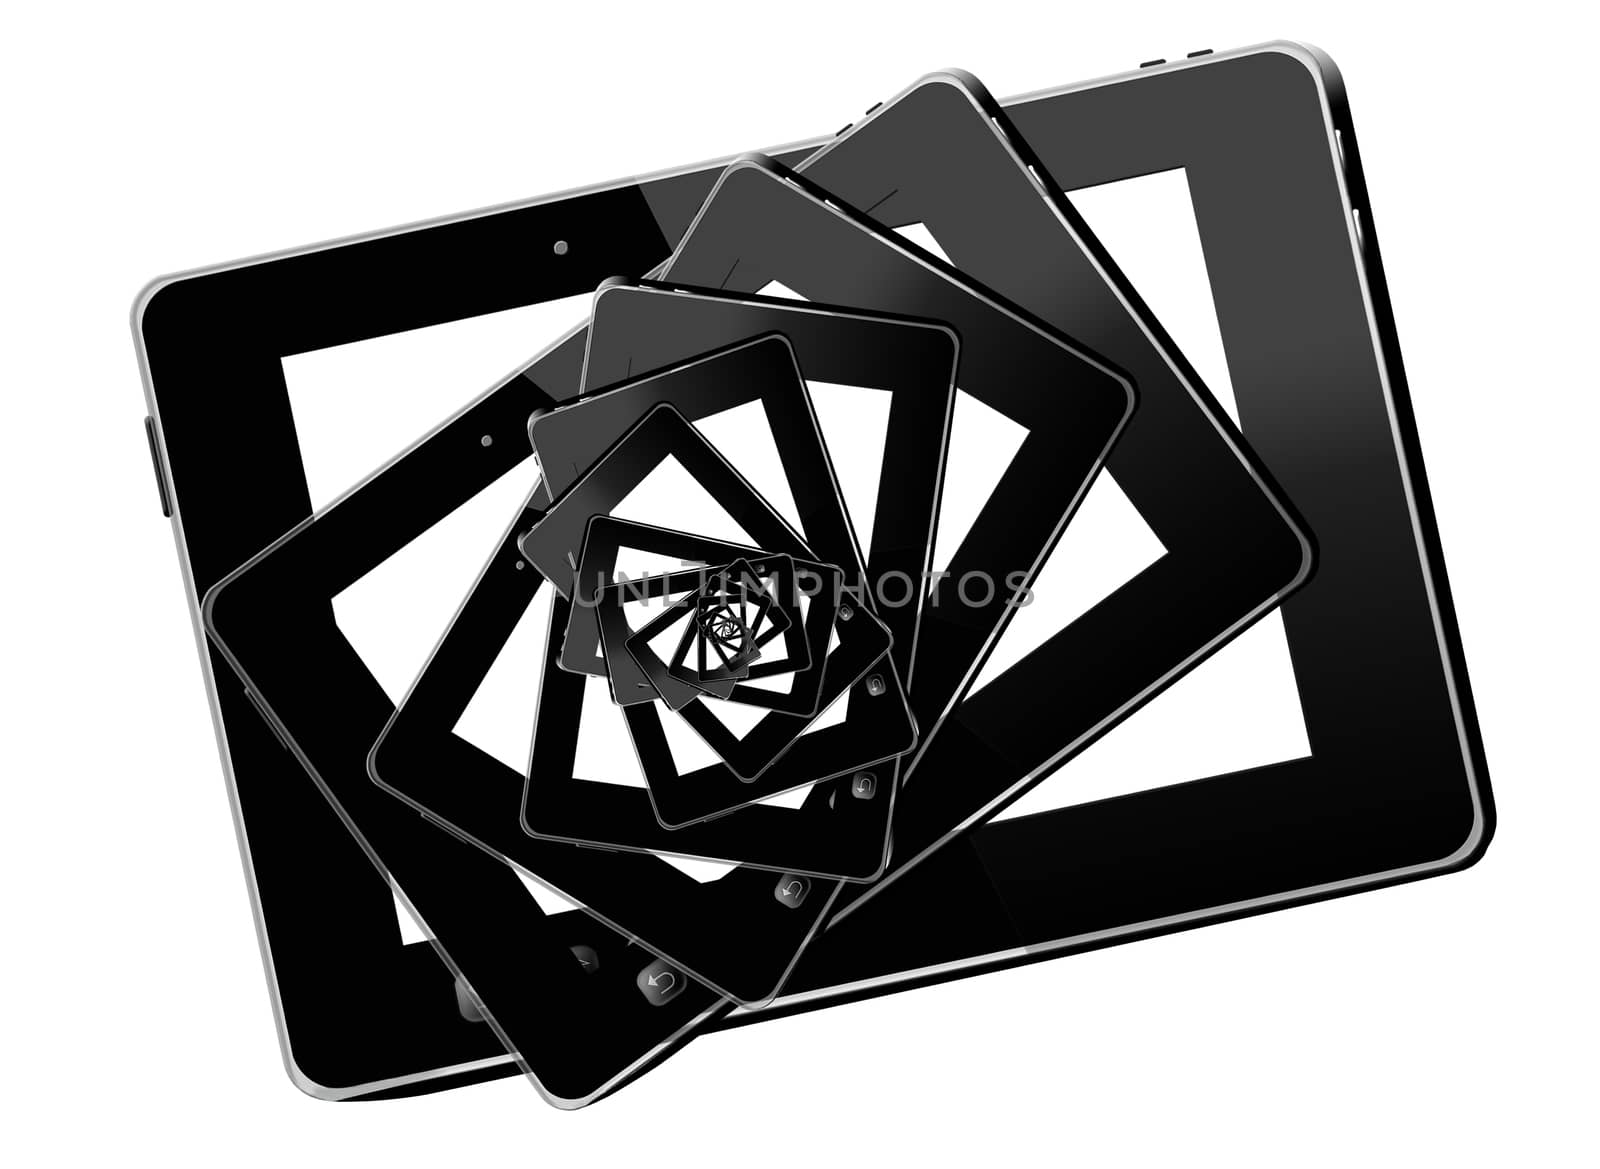 kaleidoscope from black tablets by alexmak